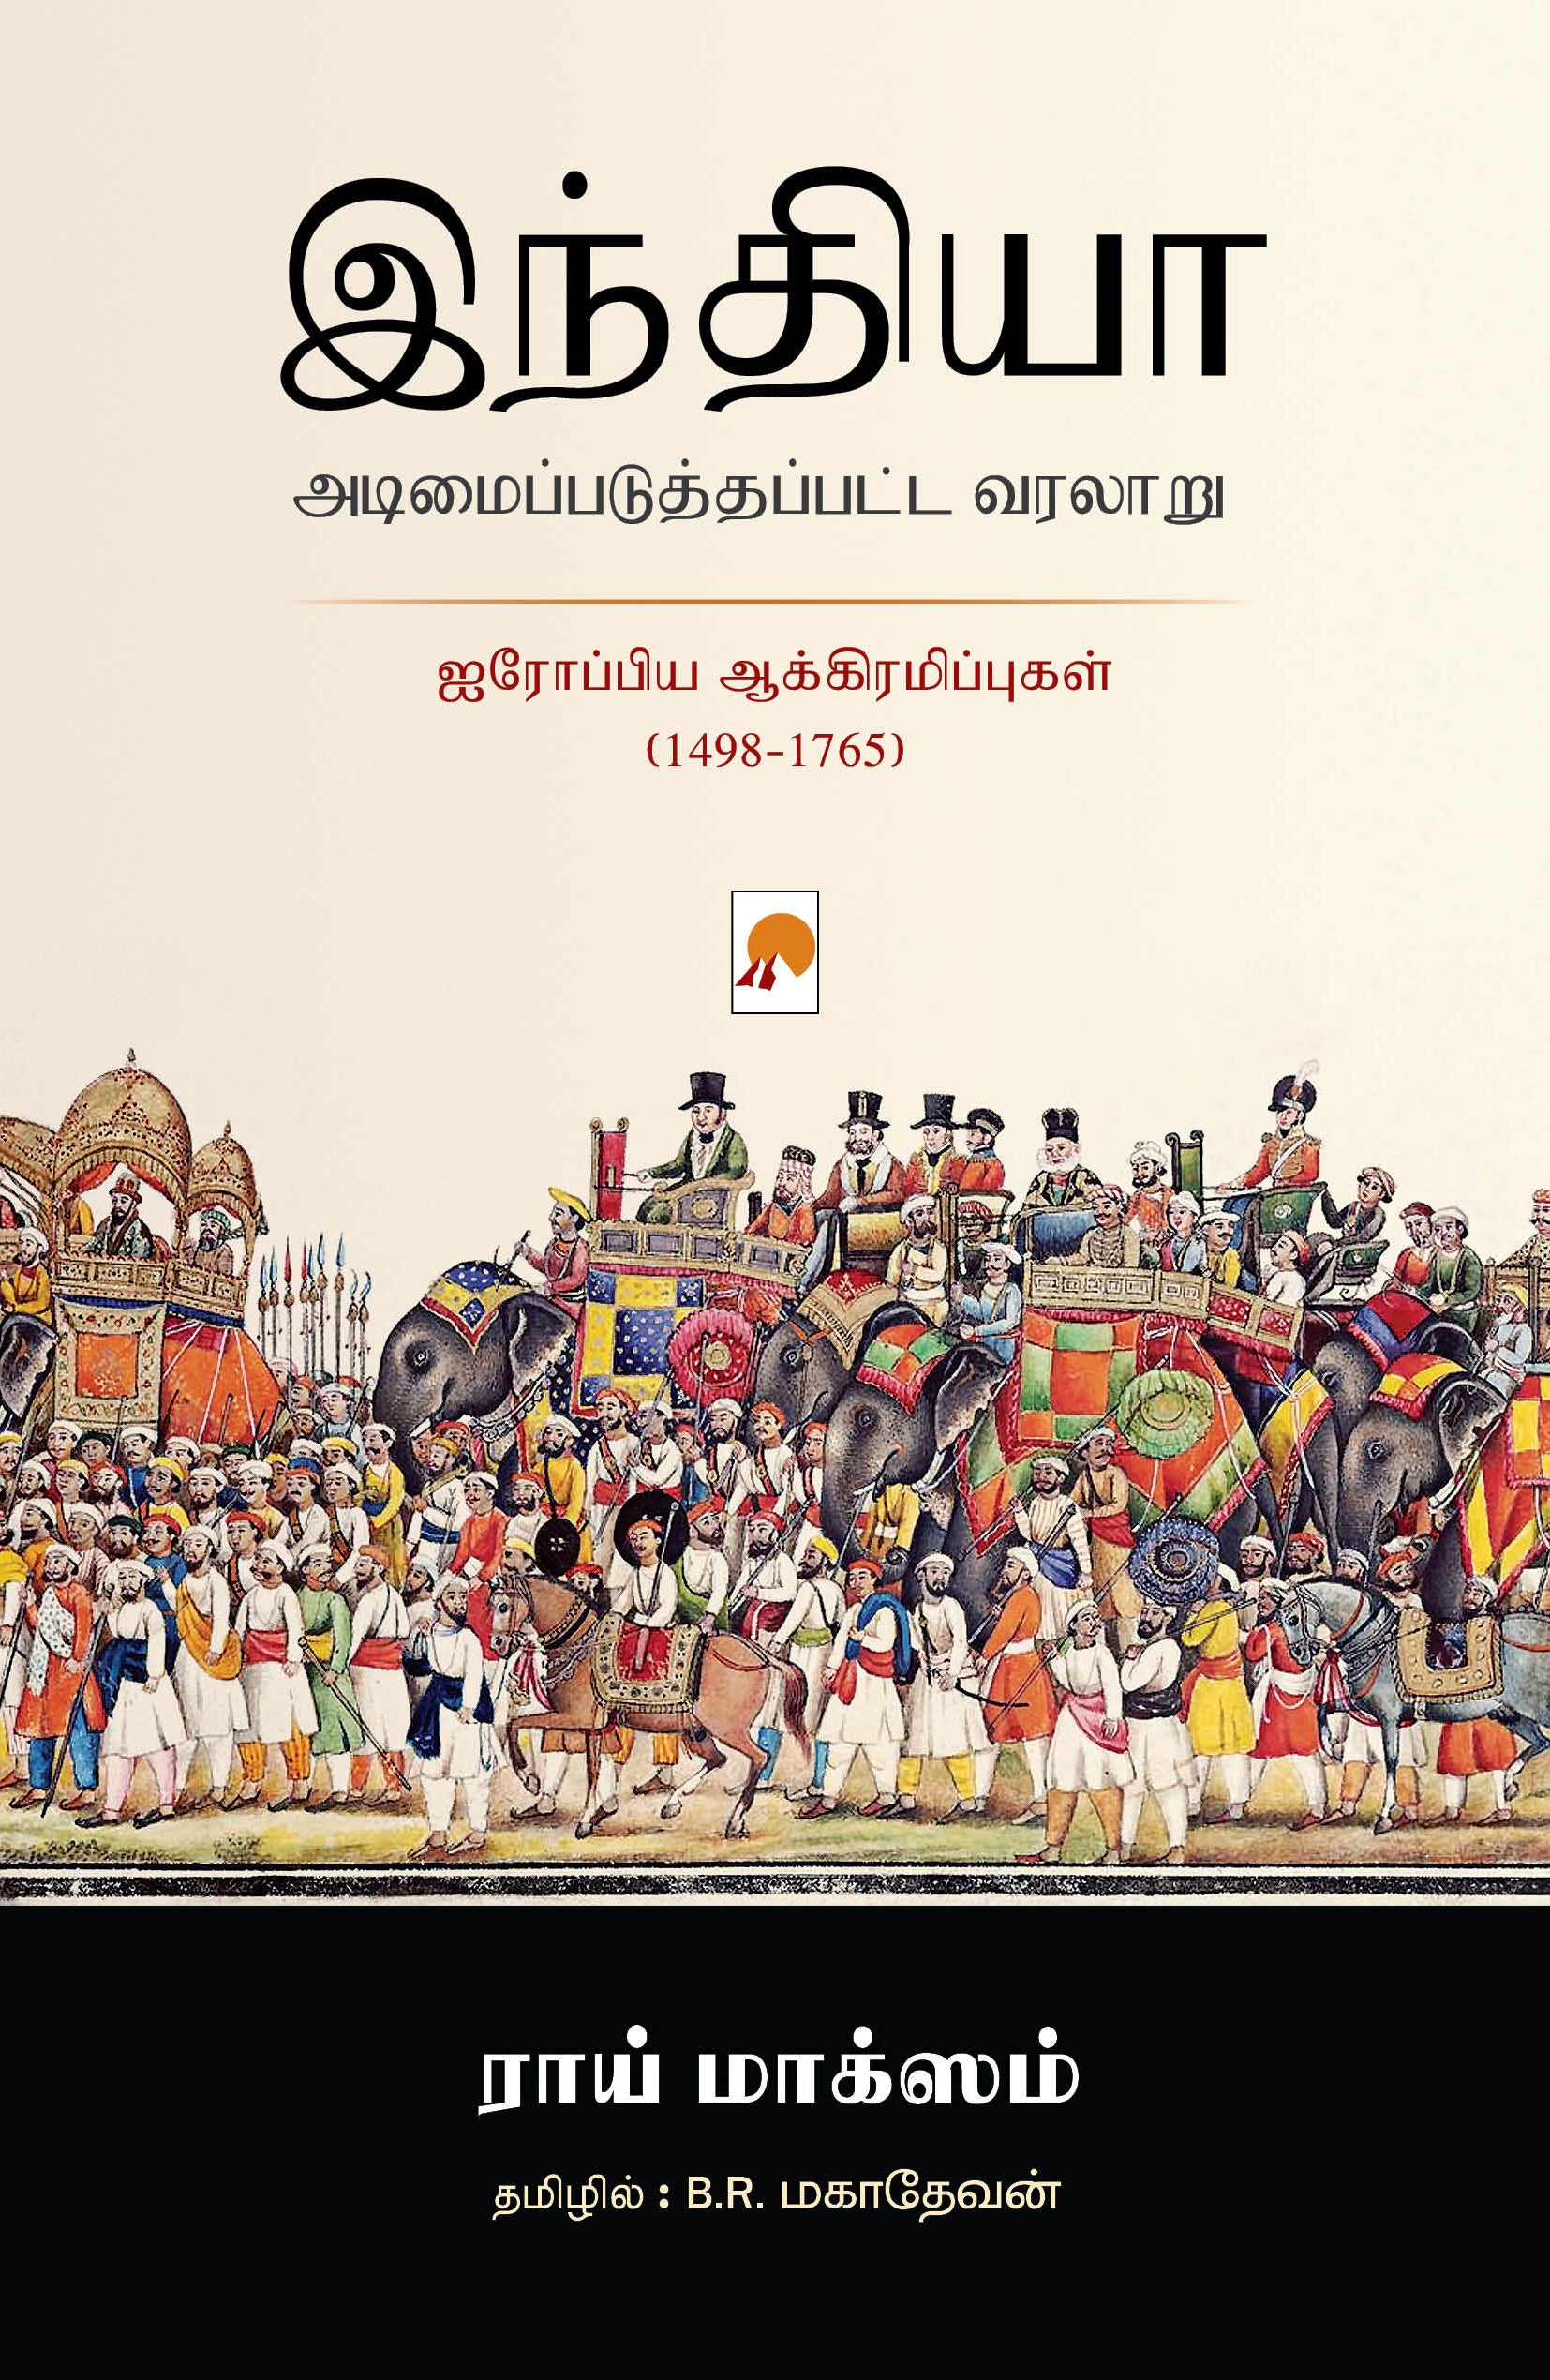 India Adimaipaduthapatta Varalaru/இந்தியா அடிமைப்படுத்தப்பட்ட வரலாறு